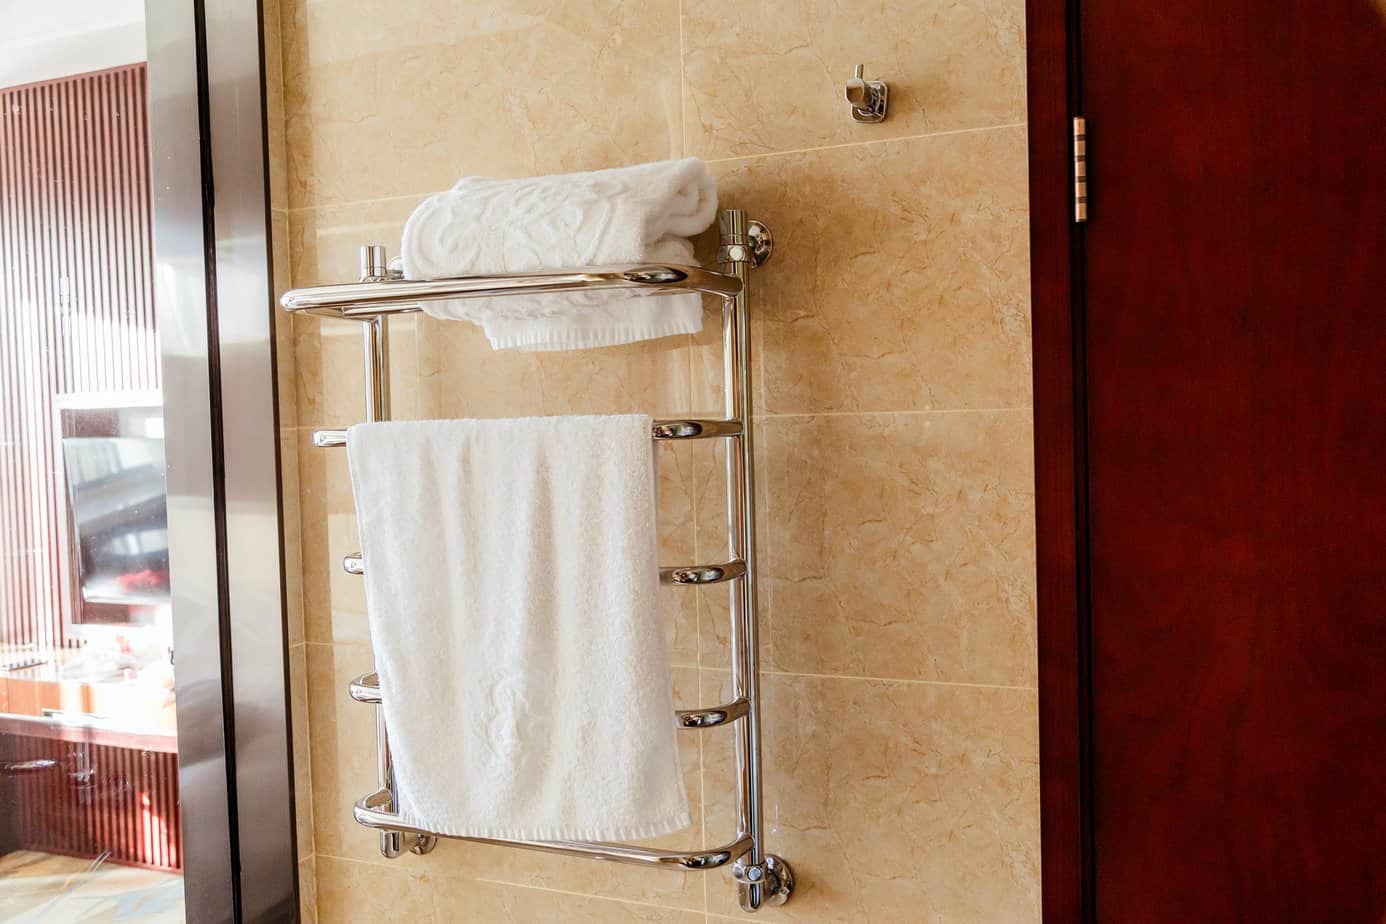 Modern heated towel rail on tiled bathroom wall.